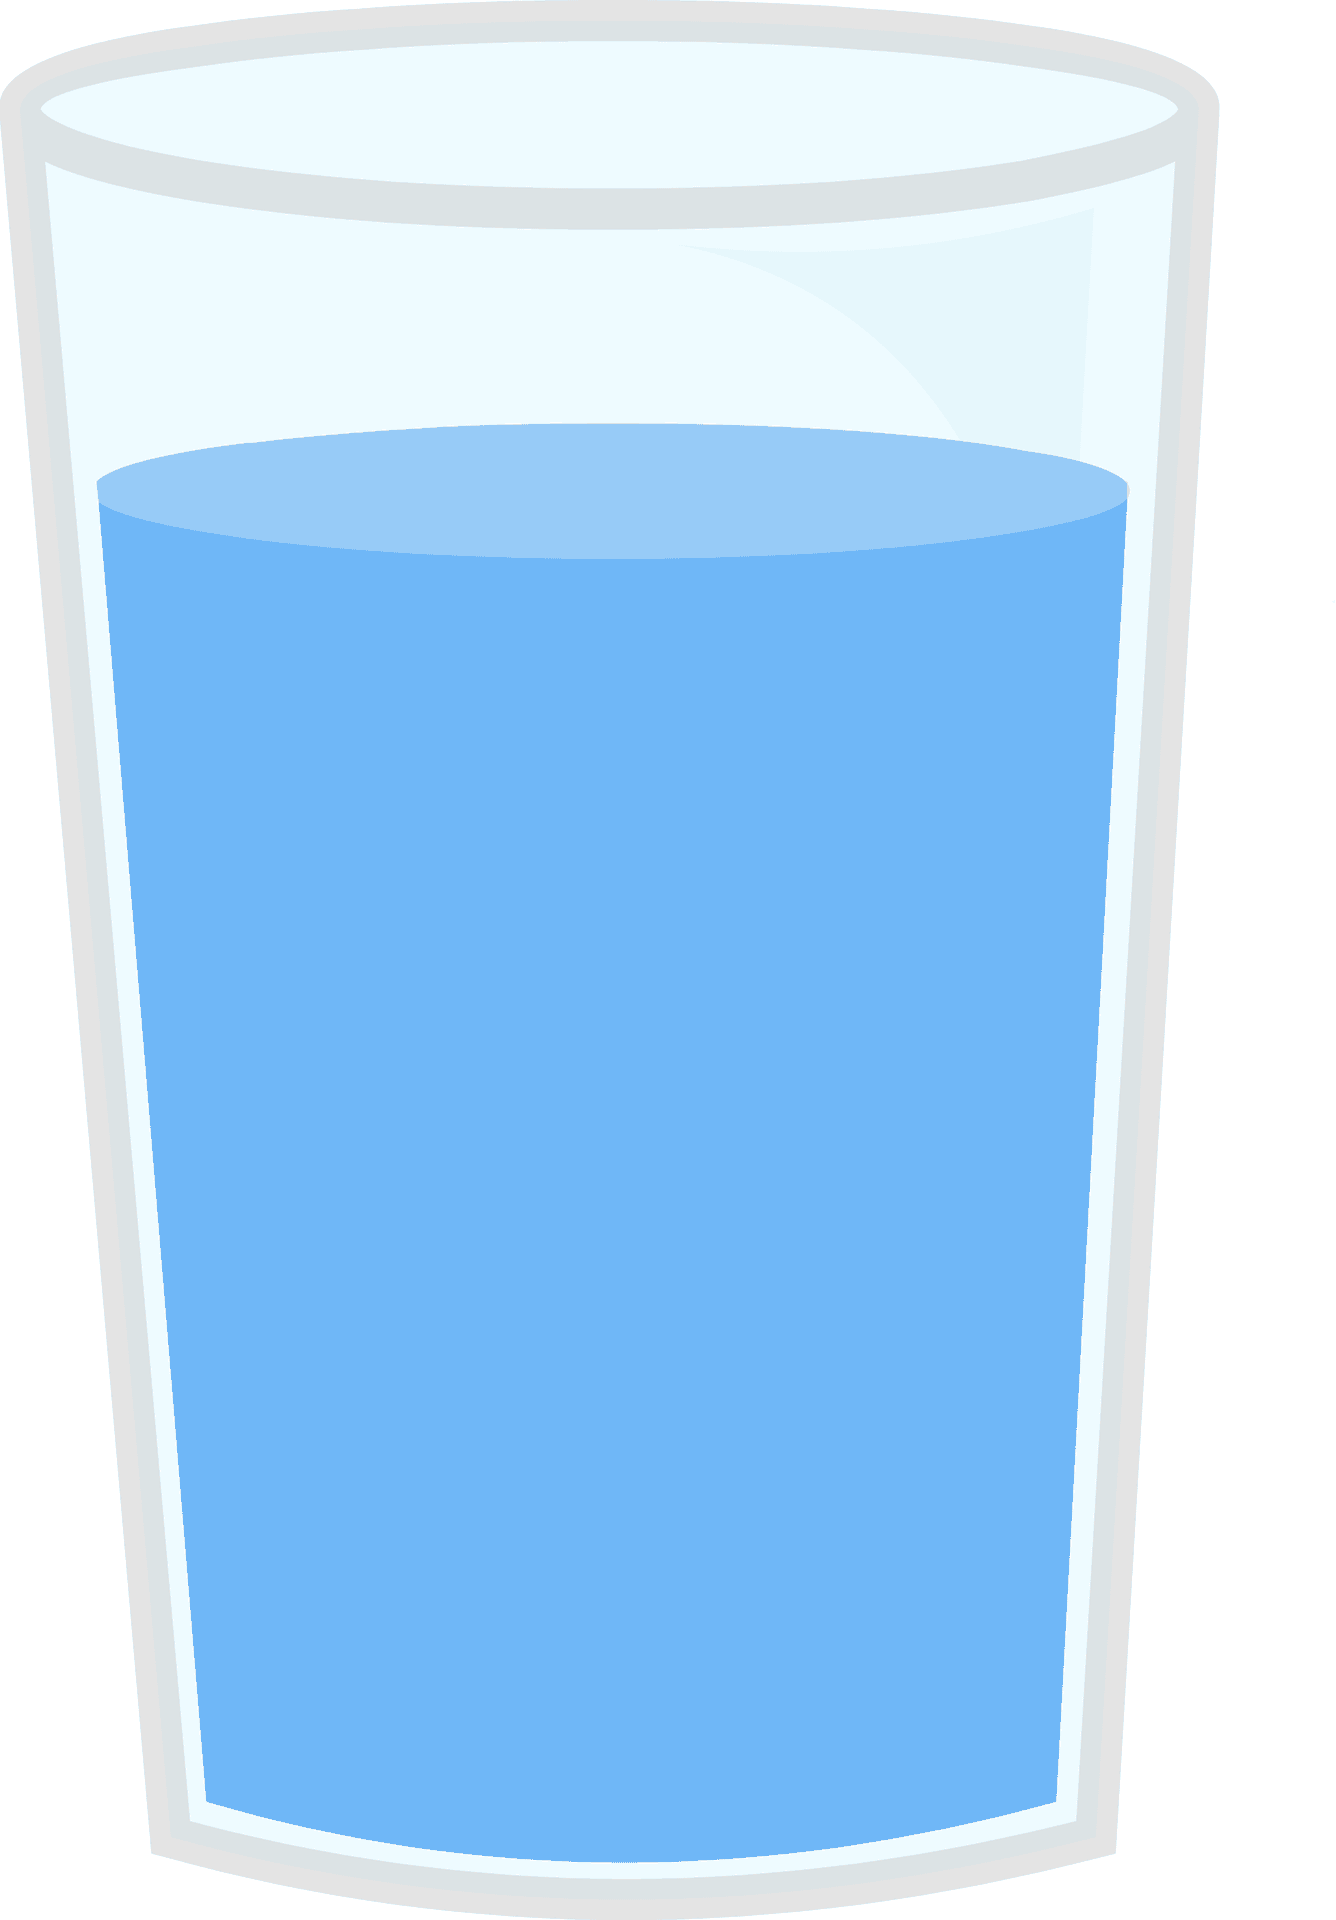 Half Full Glassof Water Vector Illustration PNG